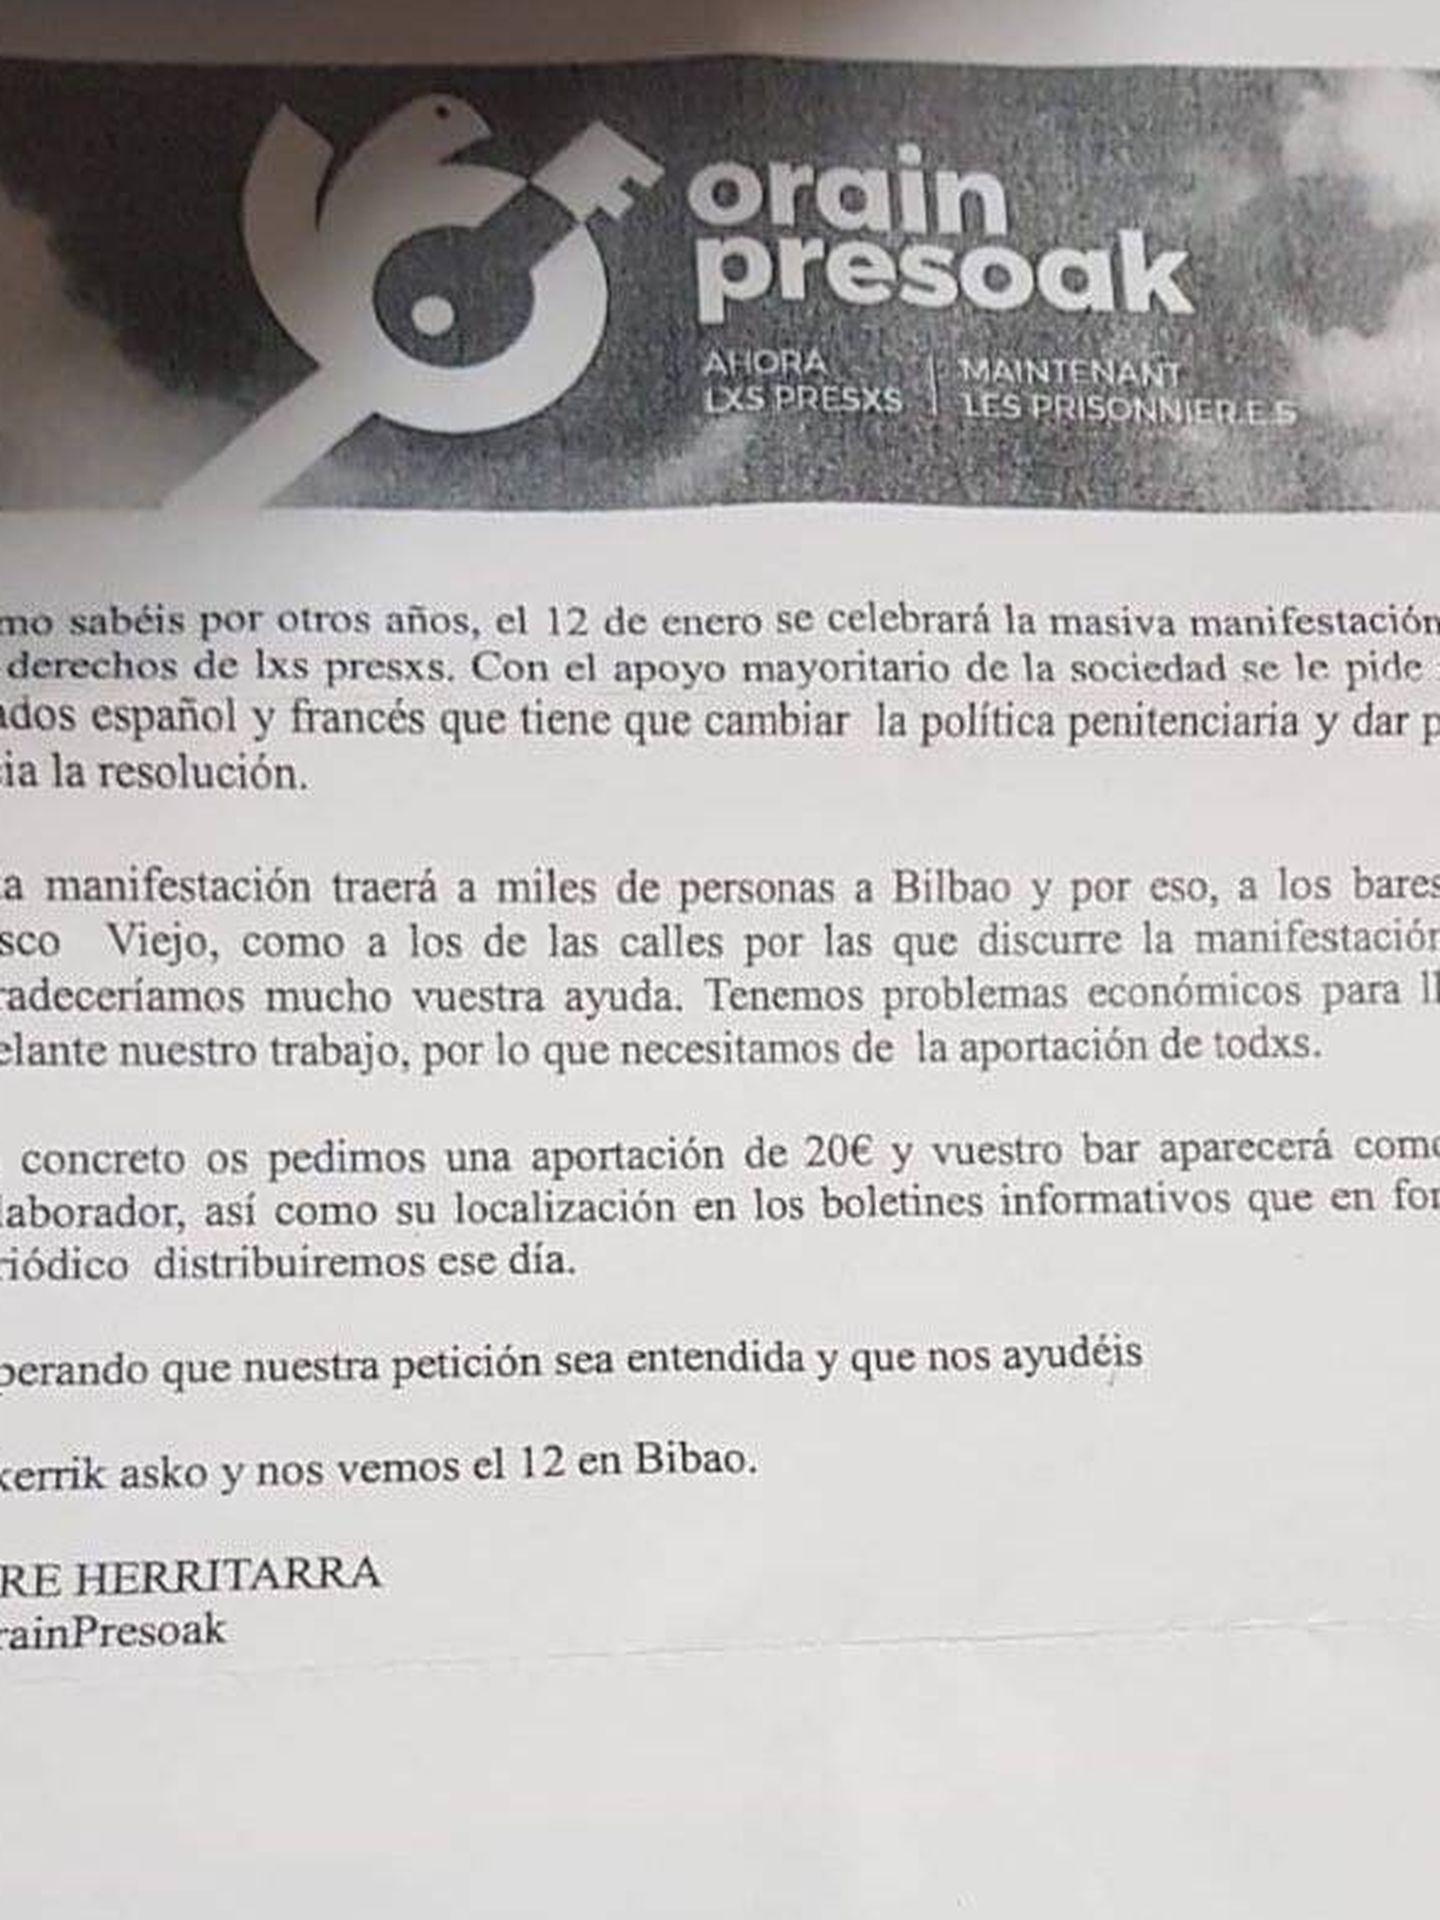 Escrito remitido por Sare a bares de Bilbao para pedirles una 'ayuda' de 20 euros. (Partido Popular) (Pinche para ampliar)